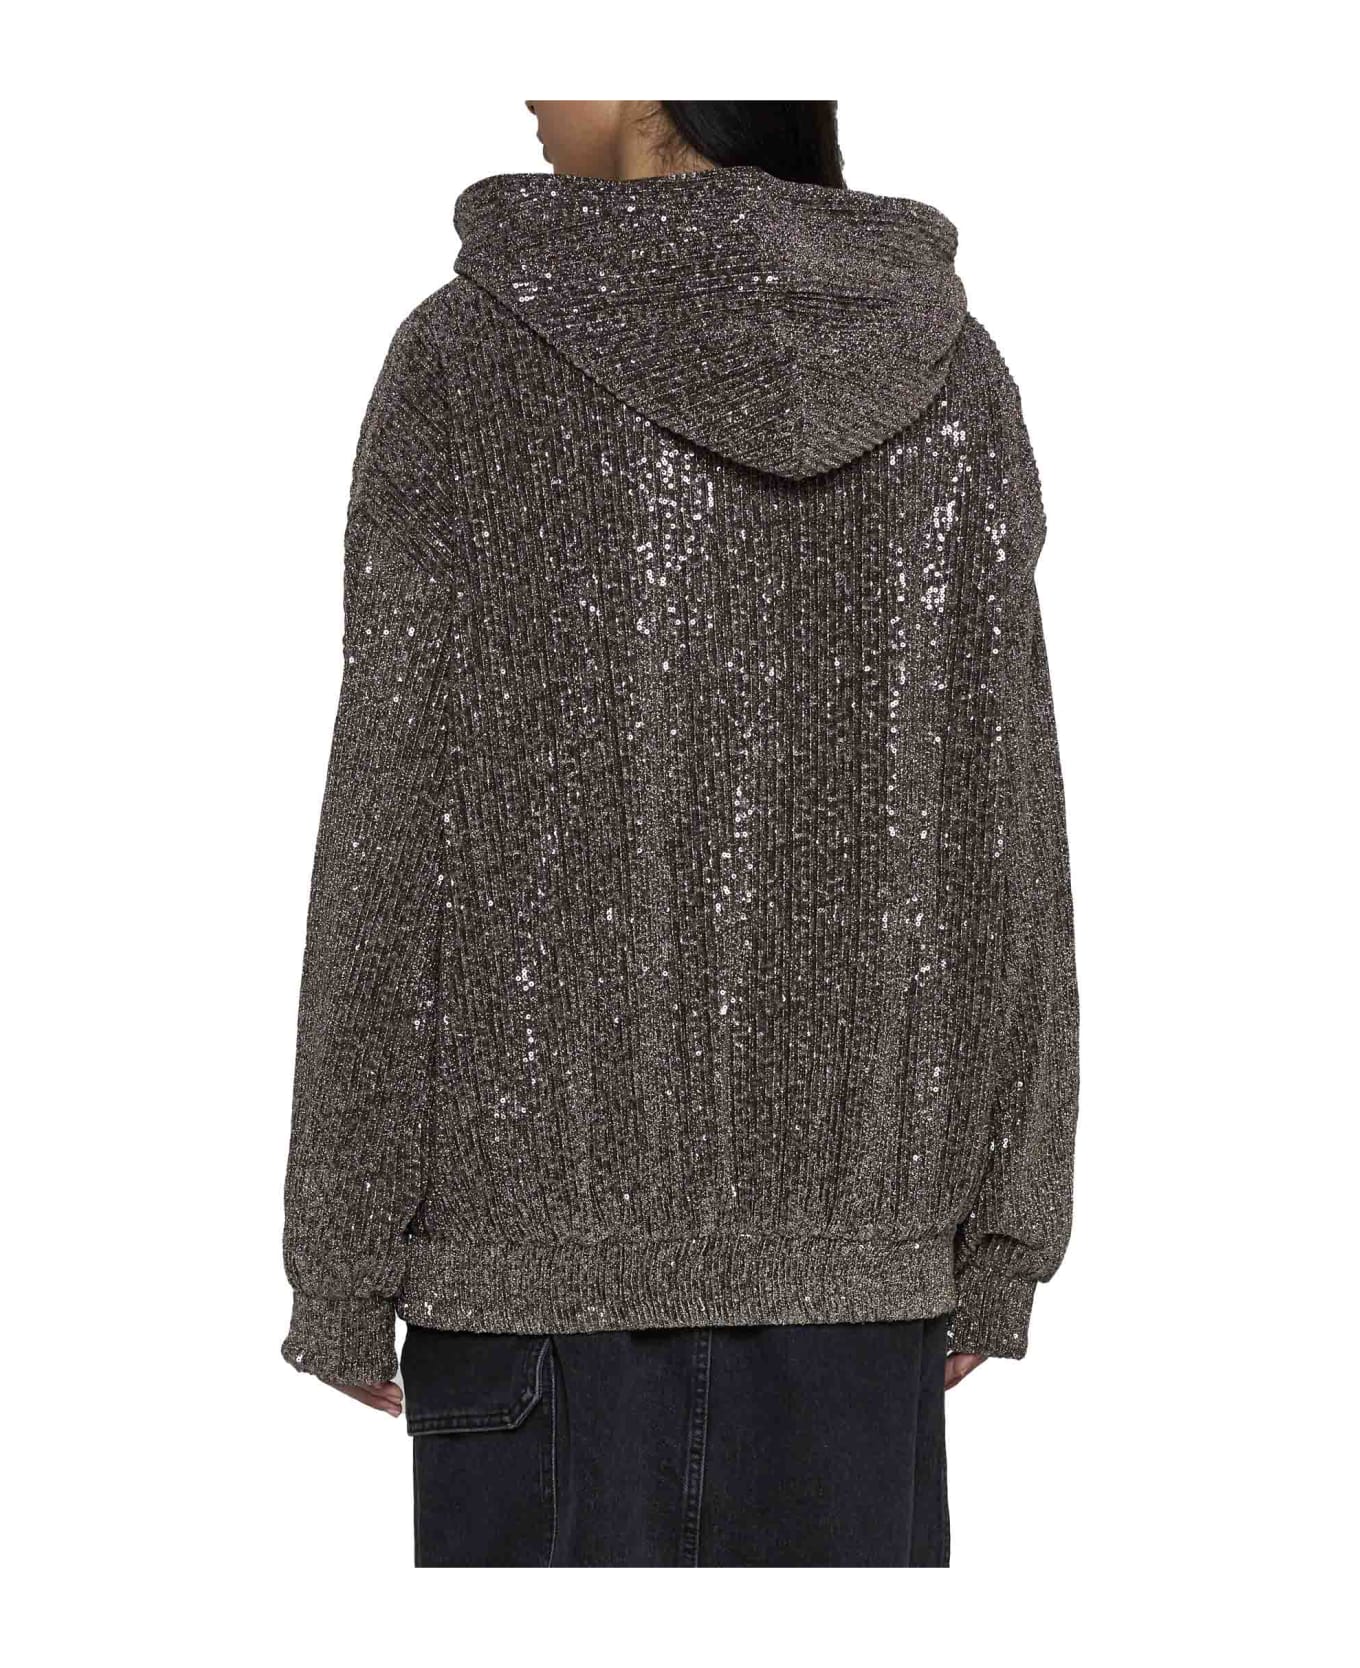 Stine Goya Sweater - Holographic sequin